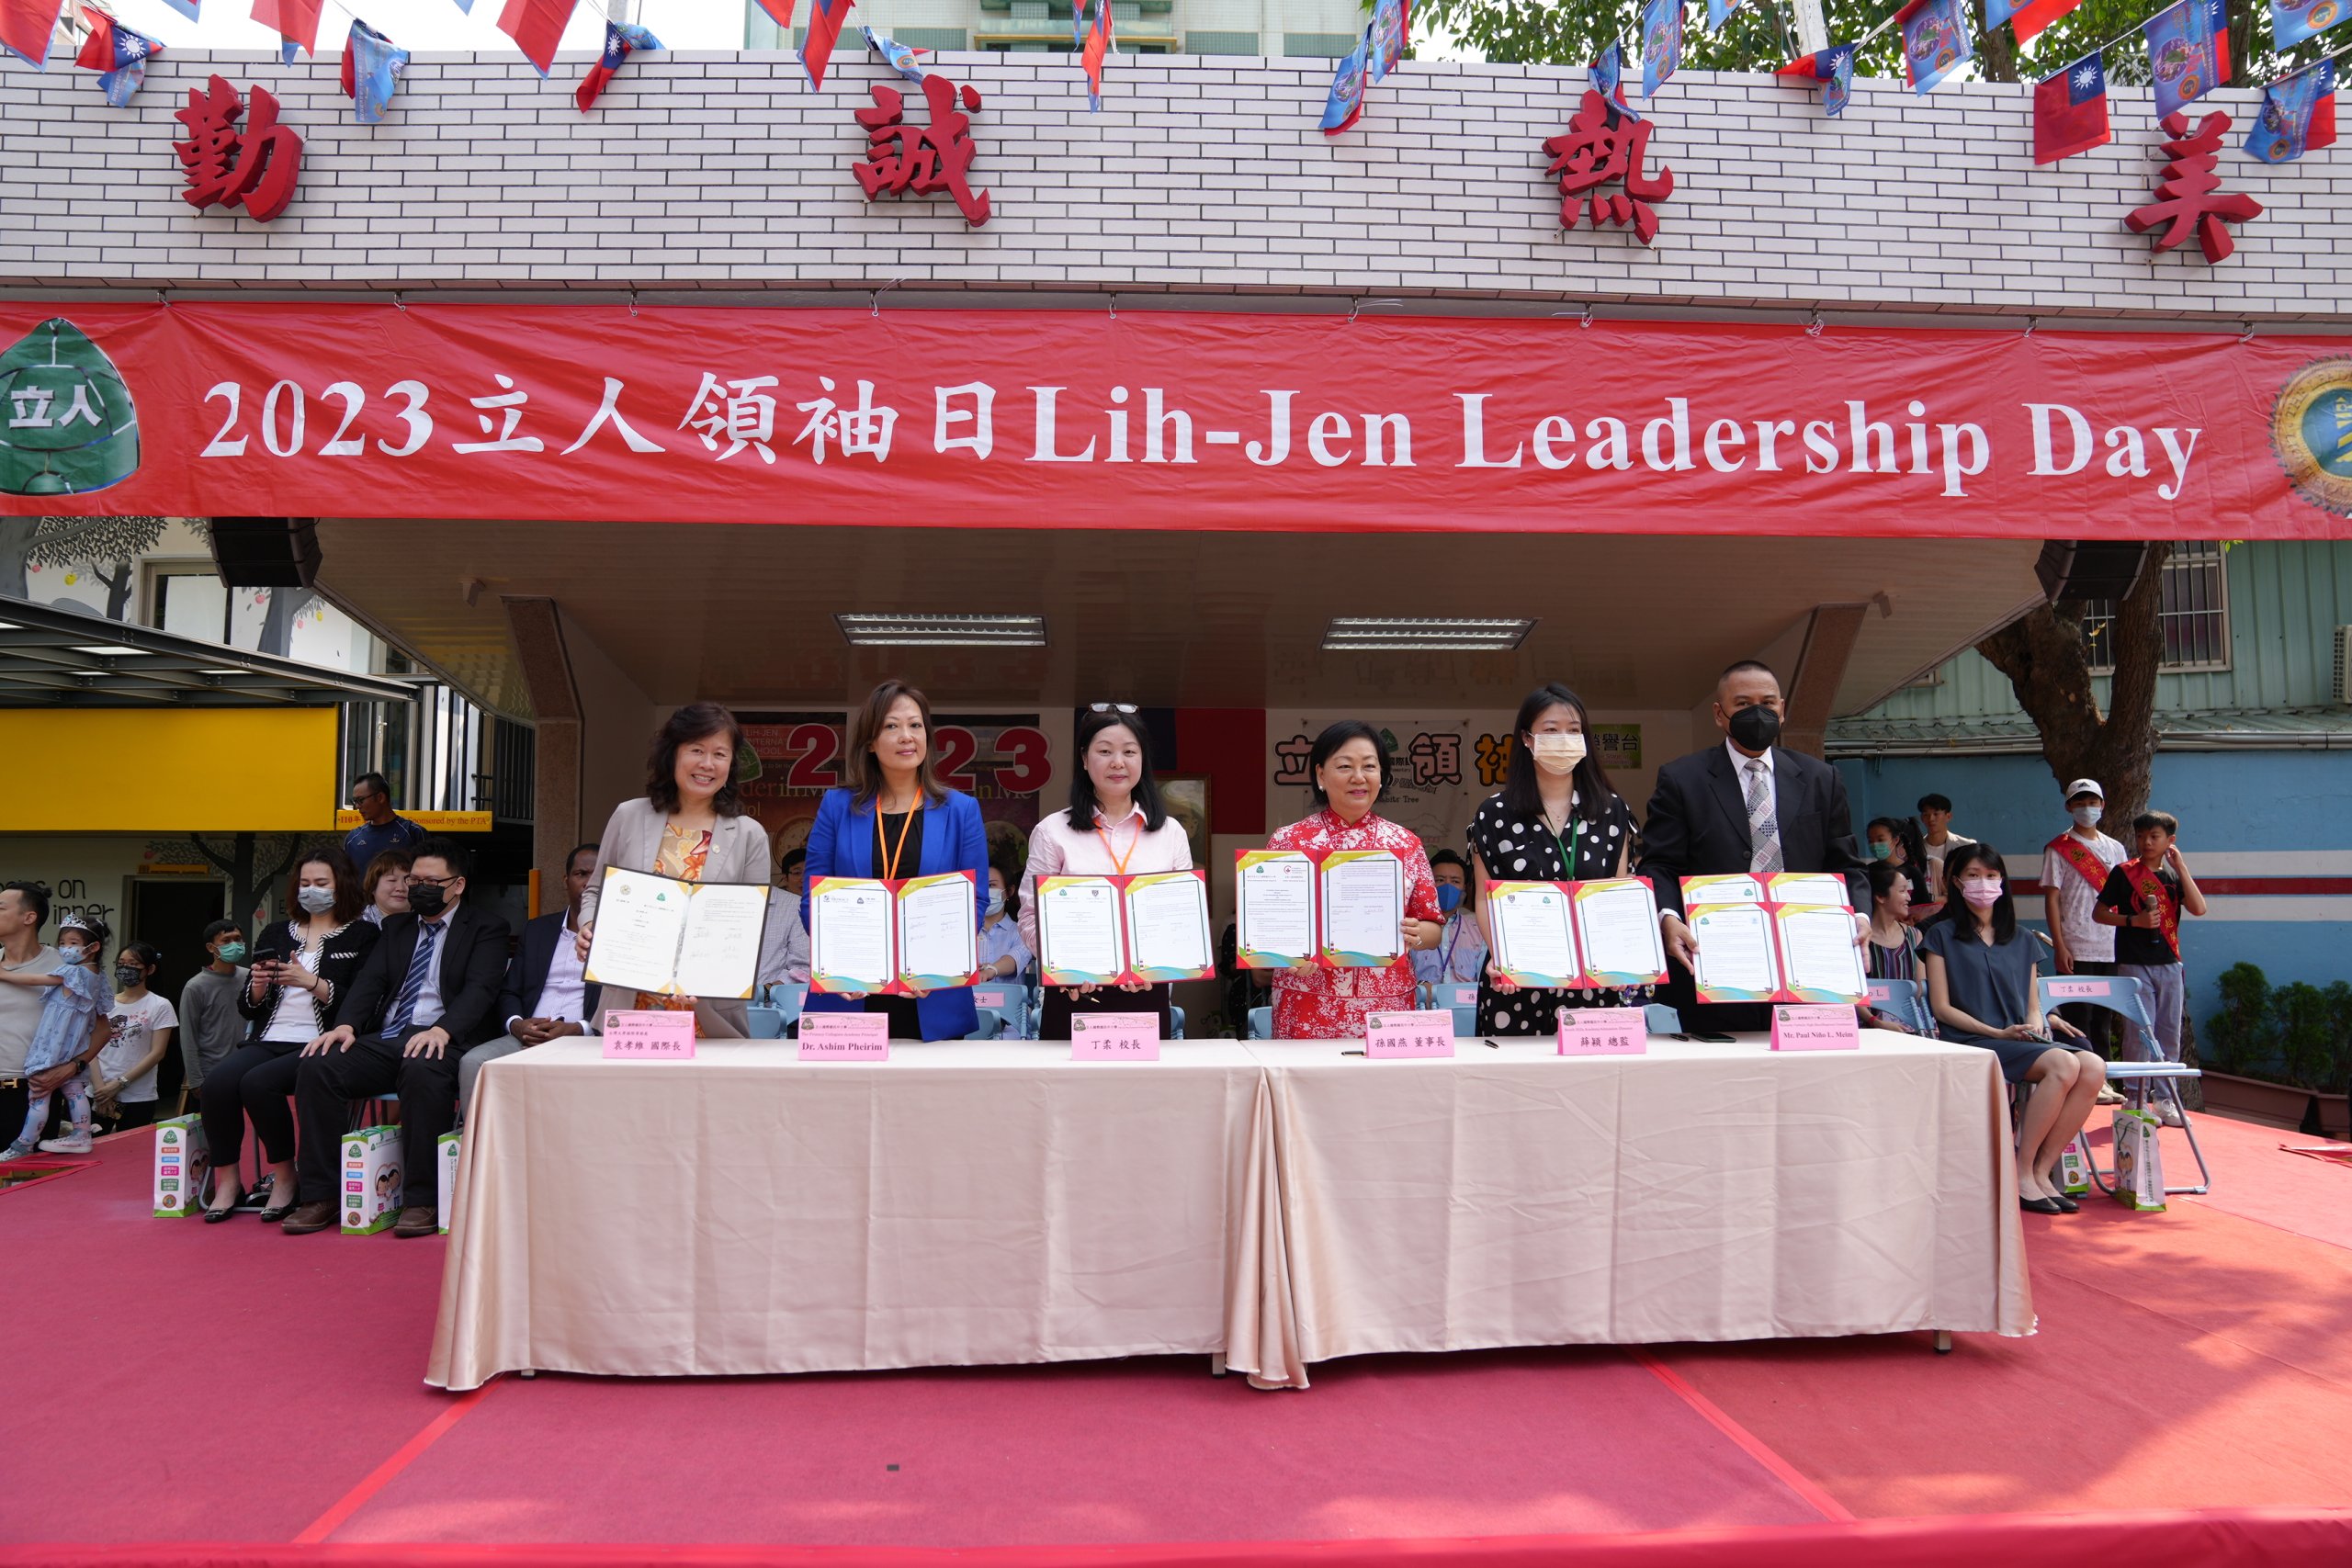 NTU and Lih-Jen School Friendship Agreement